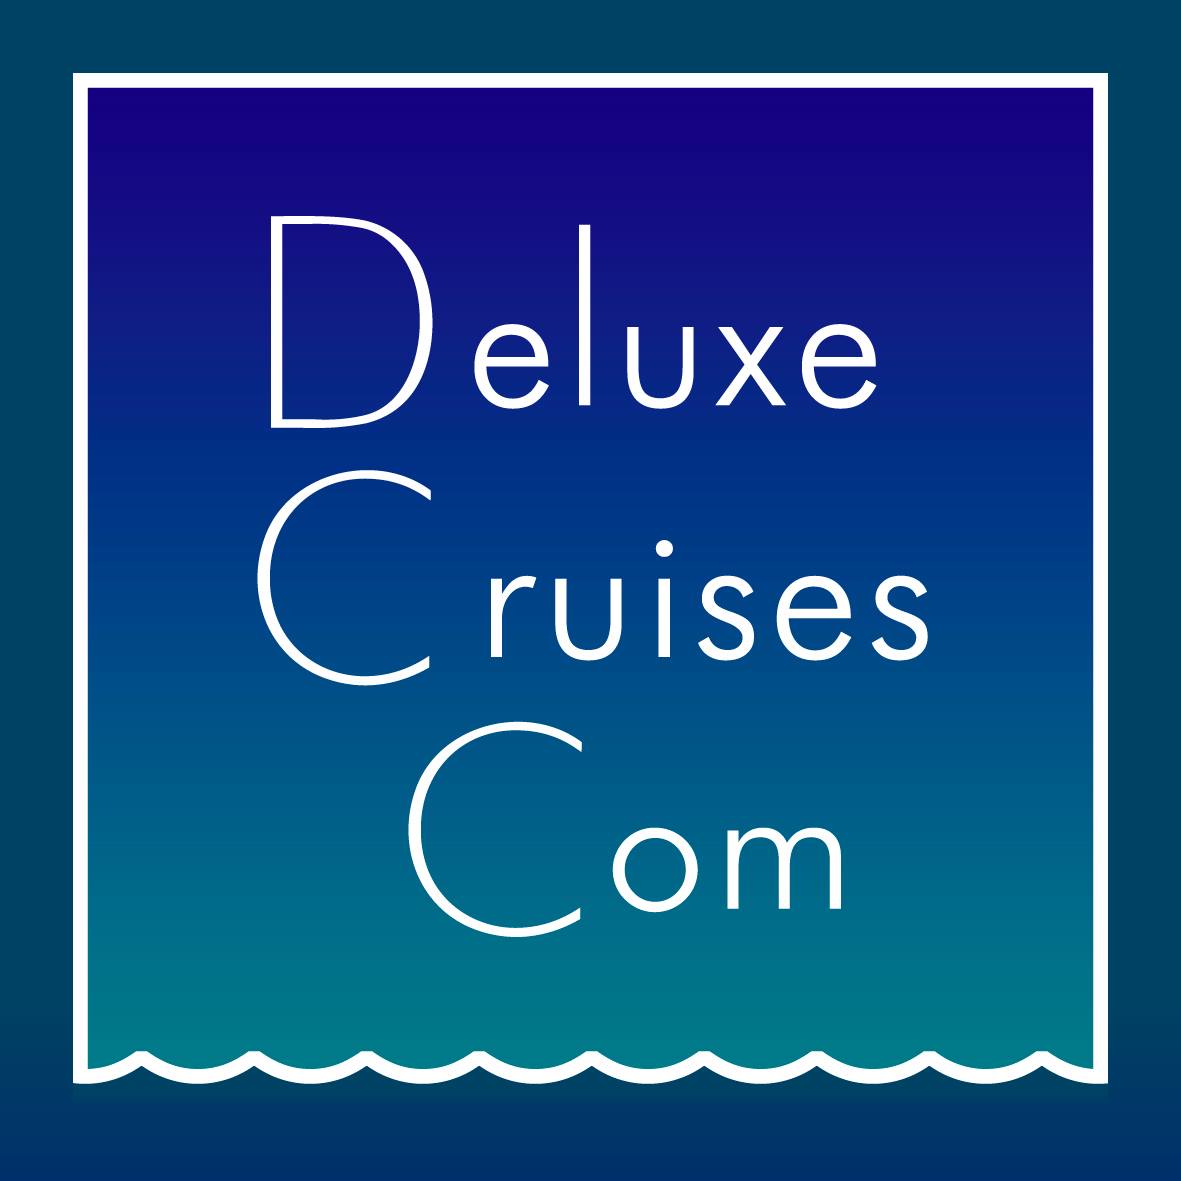 cunard, qv, queen victoria, cruise, cruises, world cruise, qv cruises